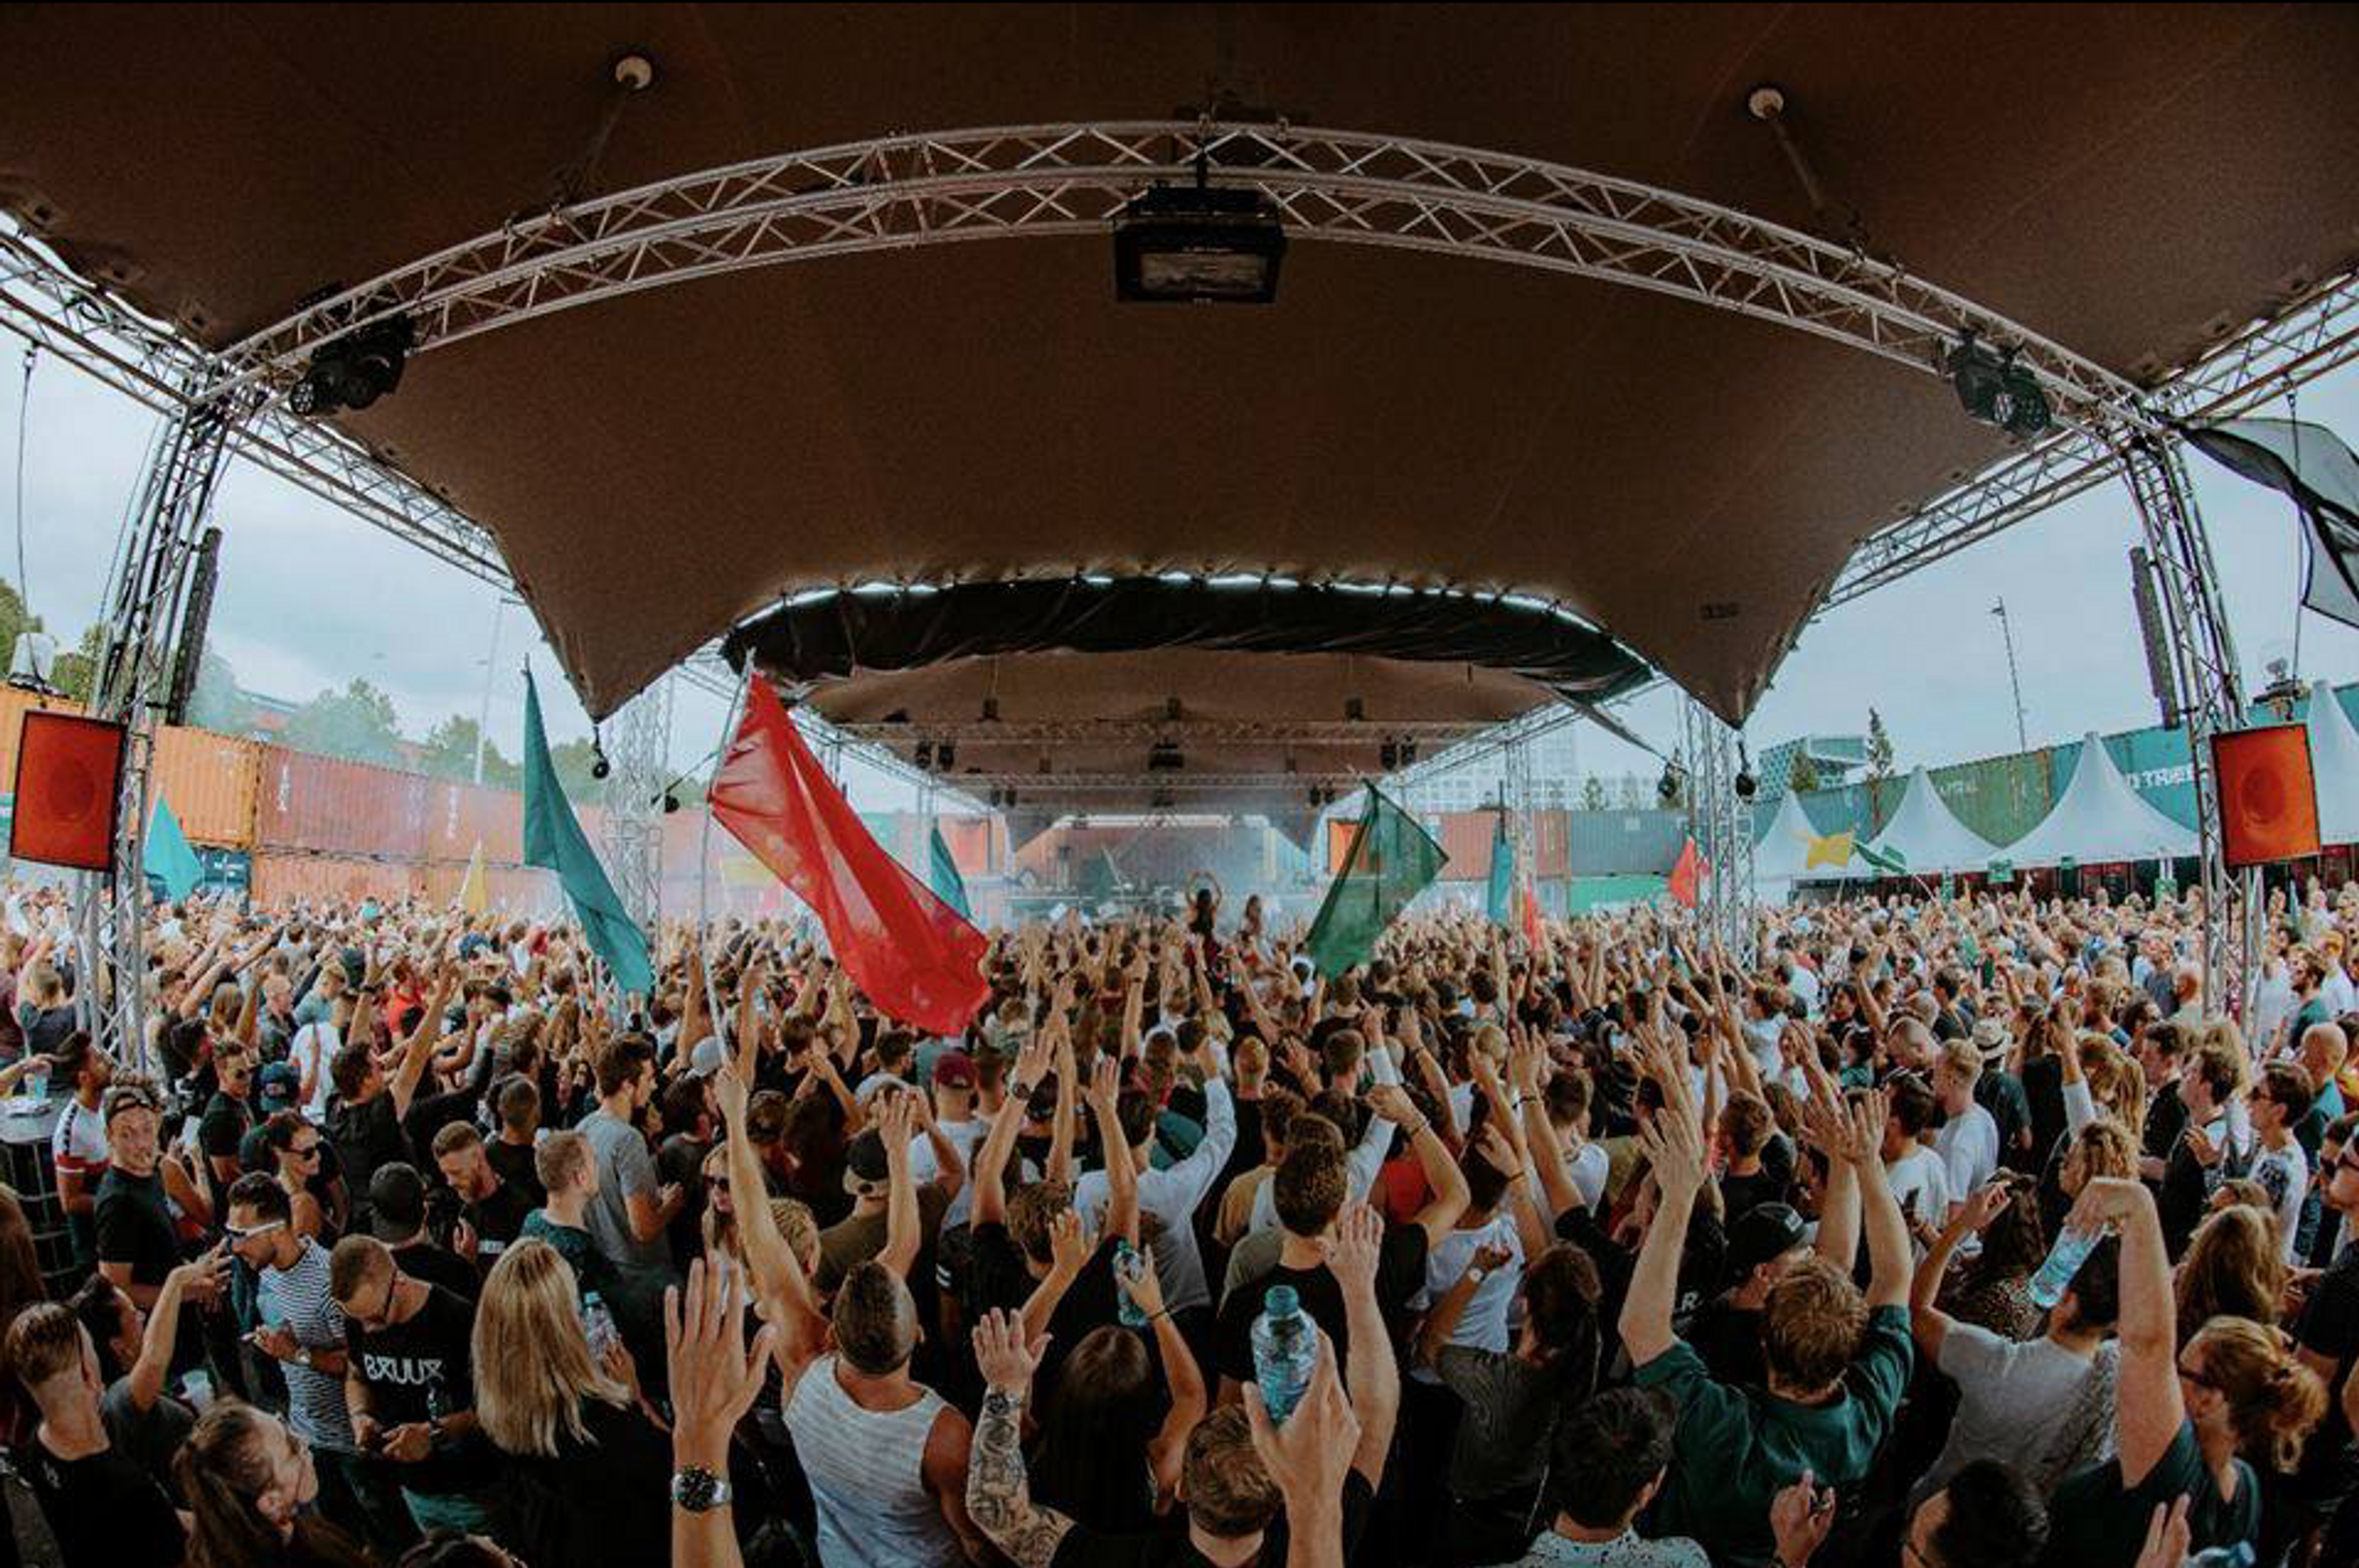 Rotterdam Rave Festival 2018